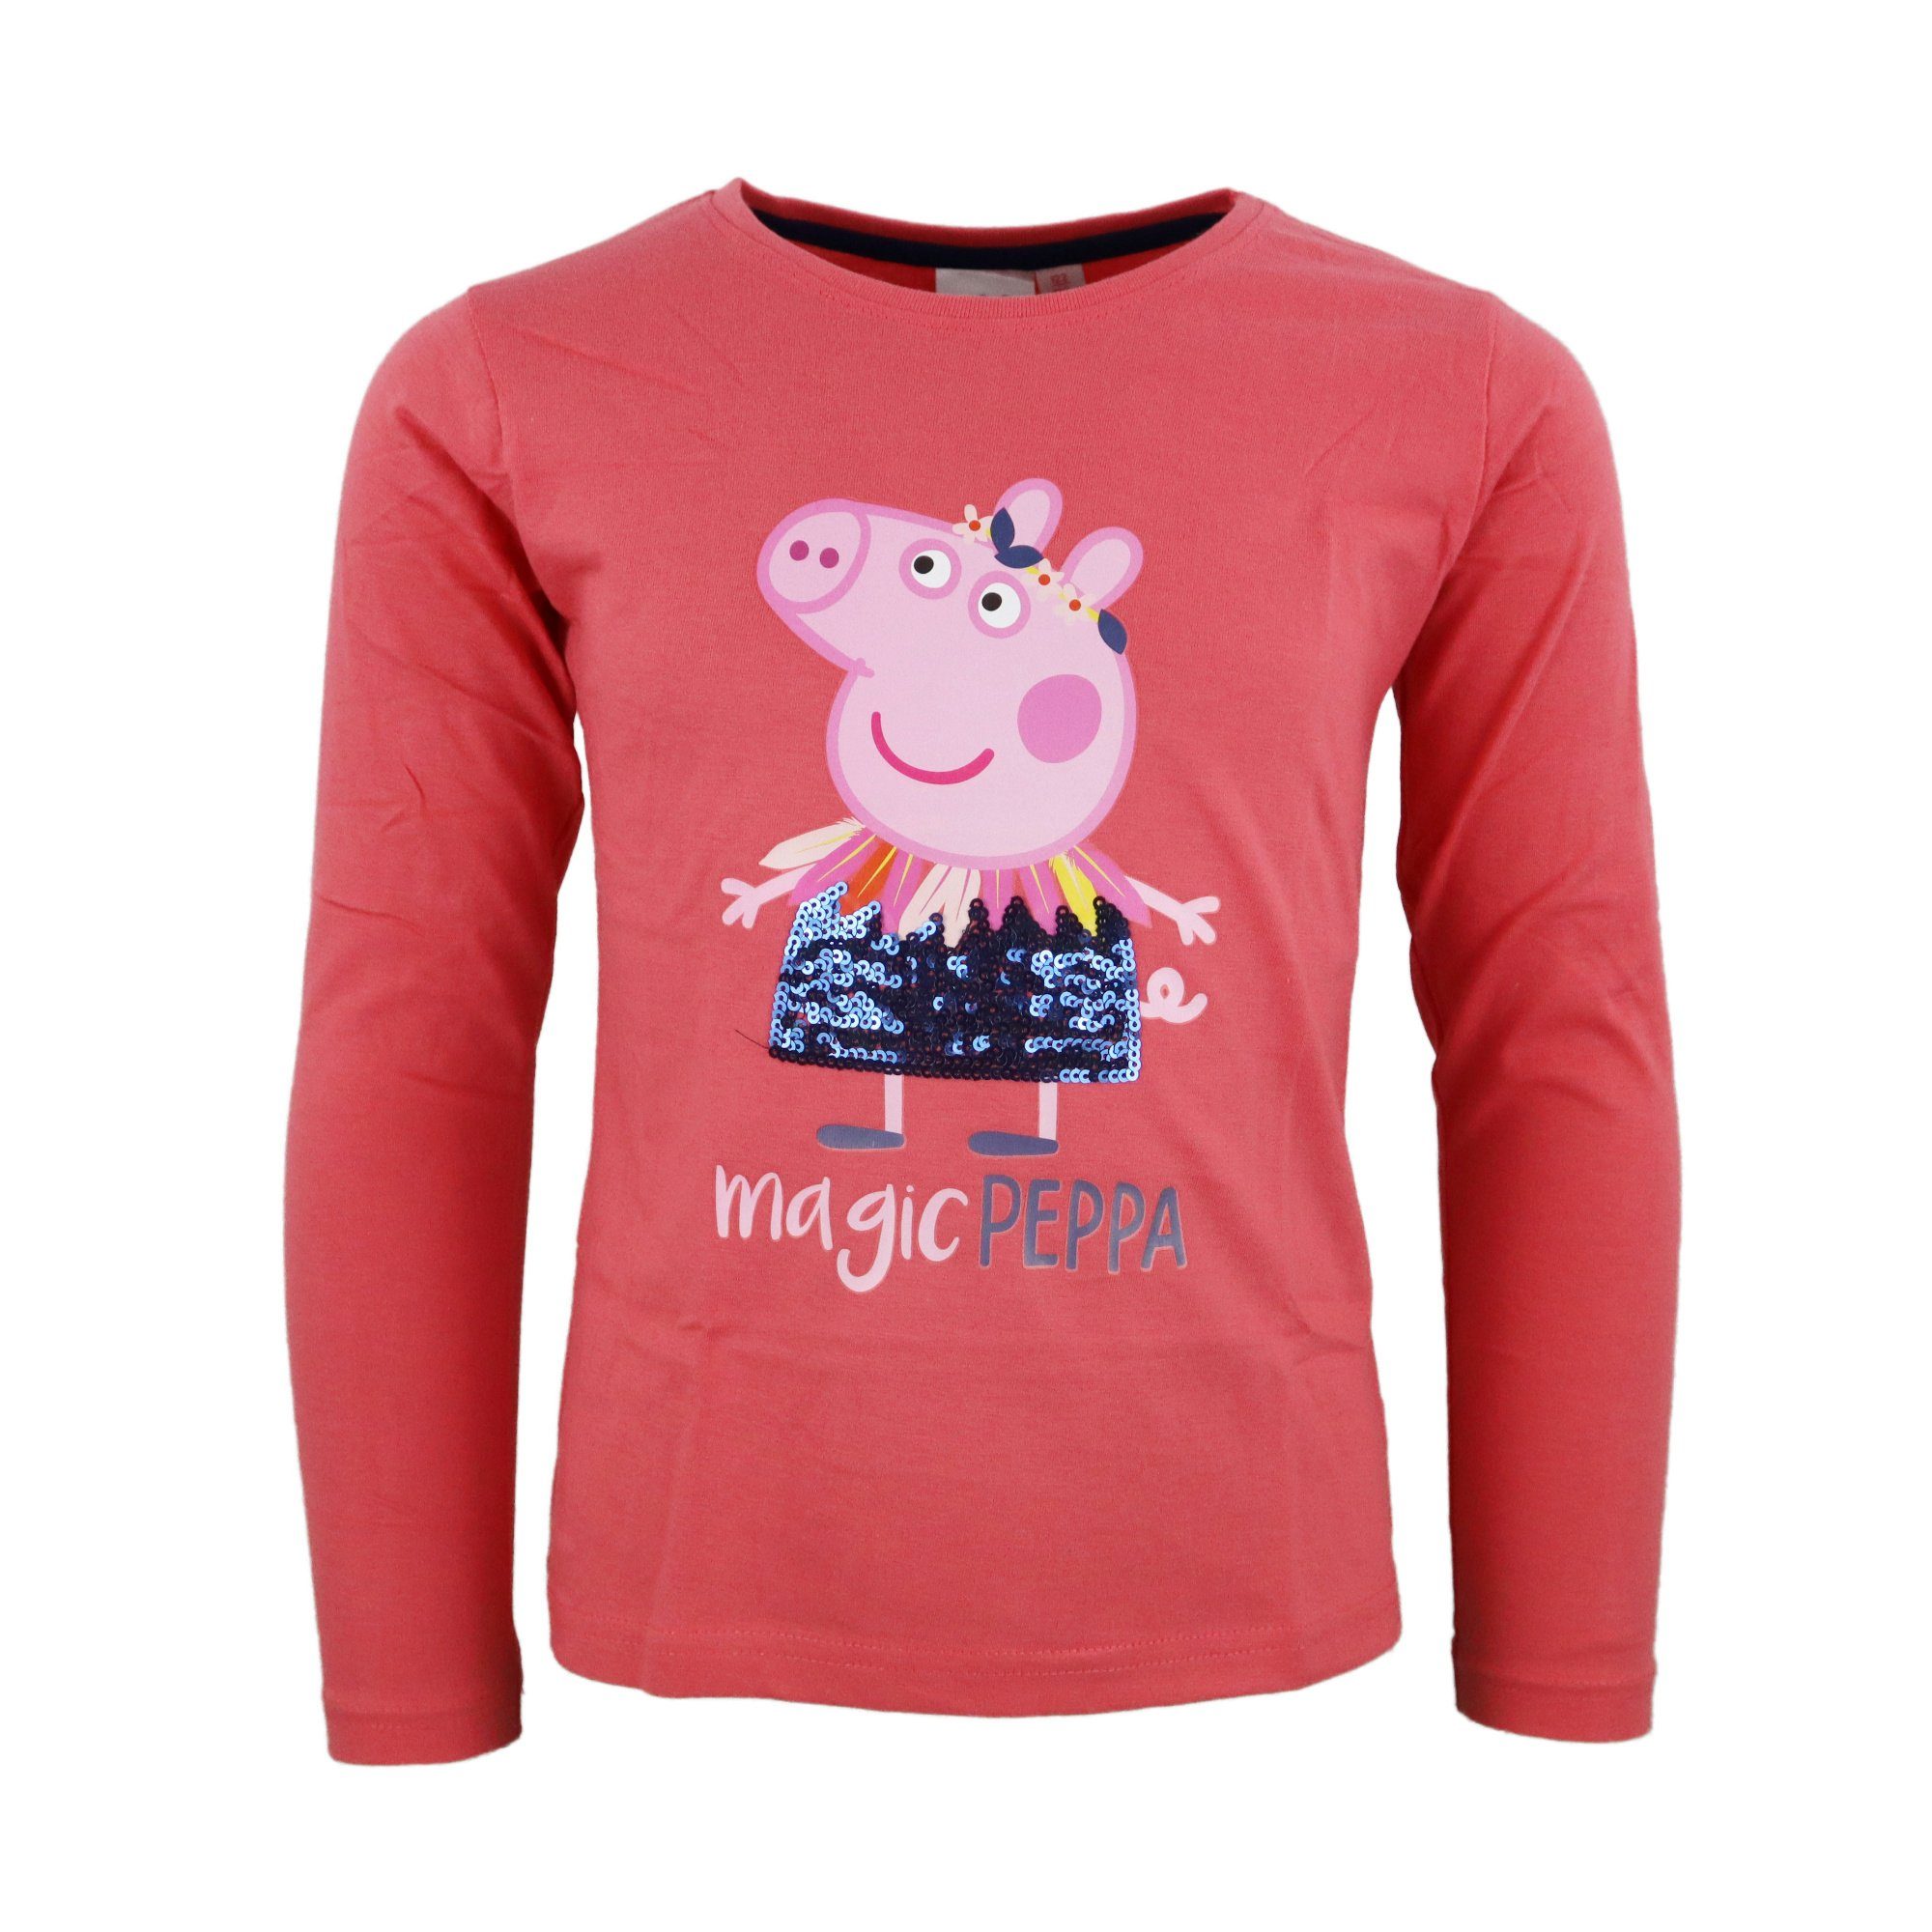 Peppa Pig Langarmshirt Peppa Wutz Mädchen Kinder Shirt Gr. 98 bis 128, 100%  Baumwolle